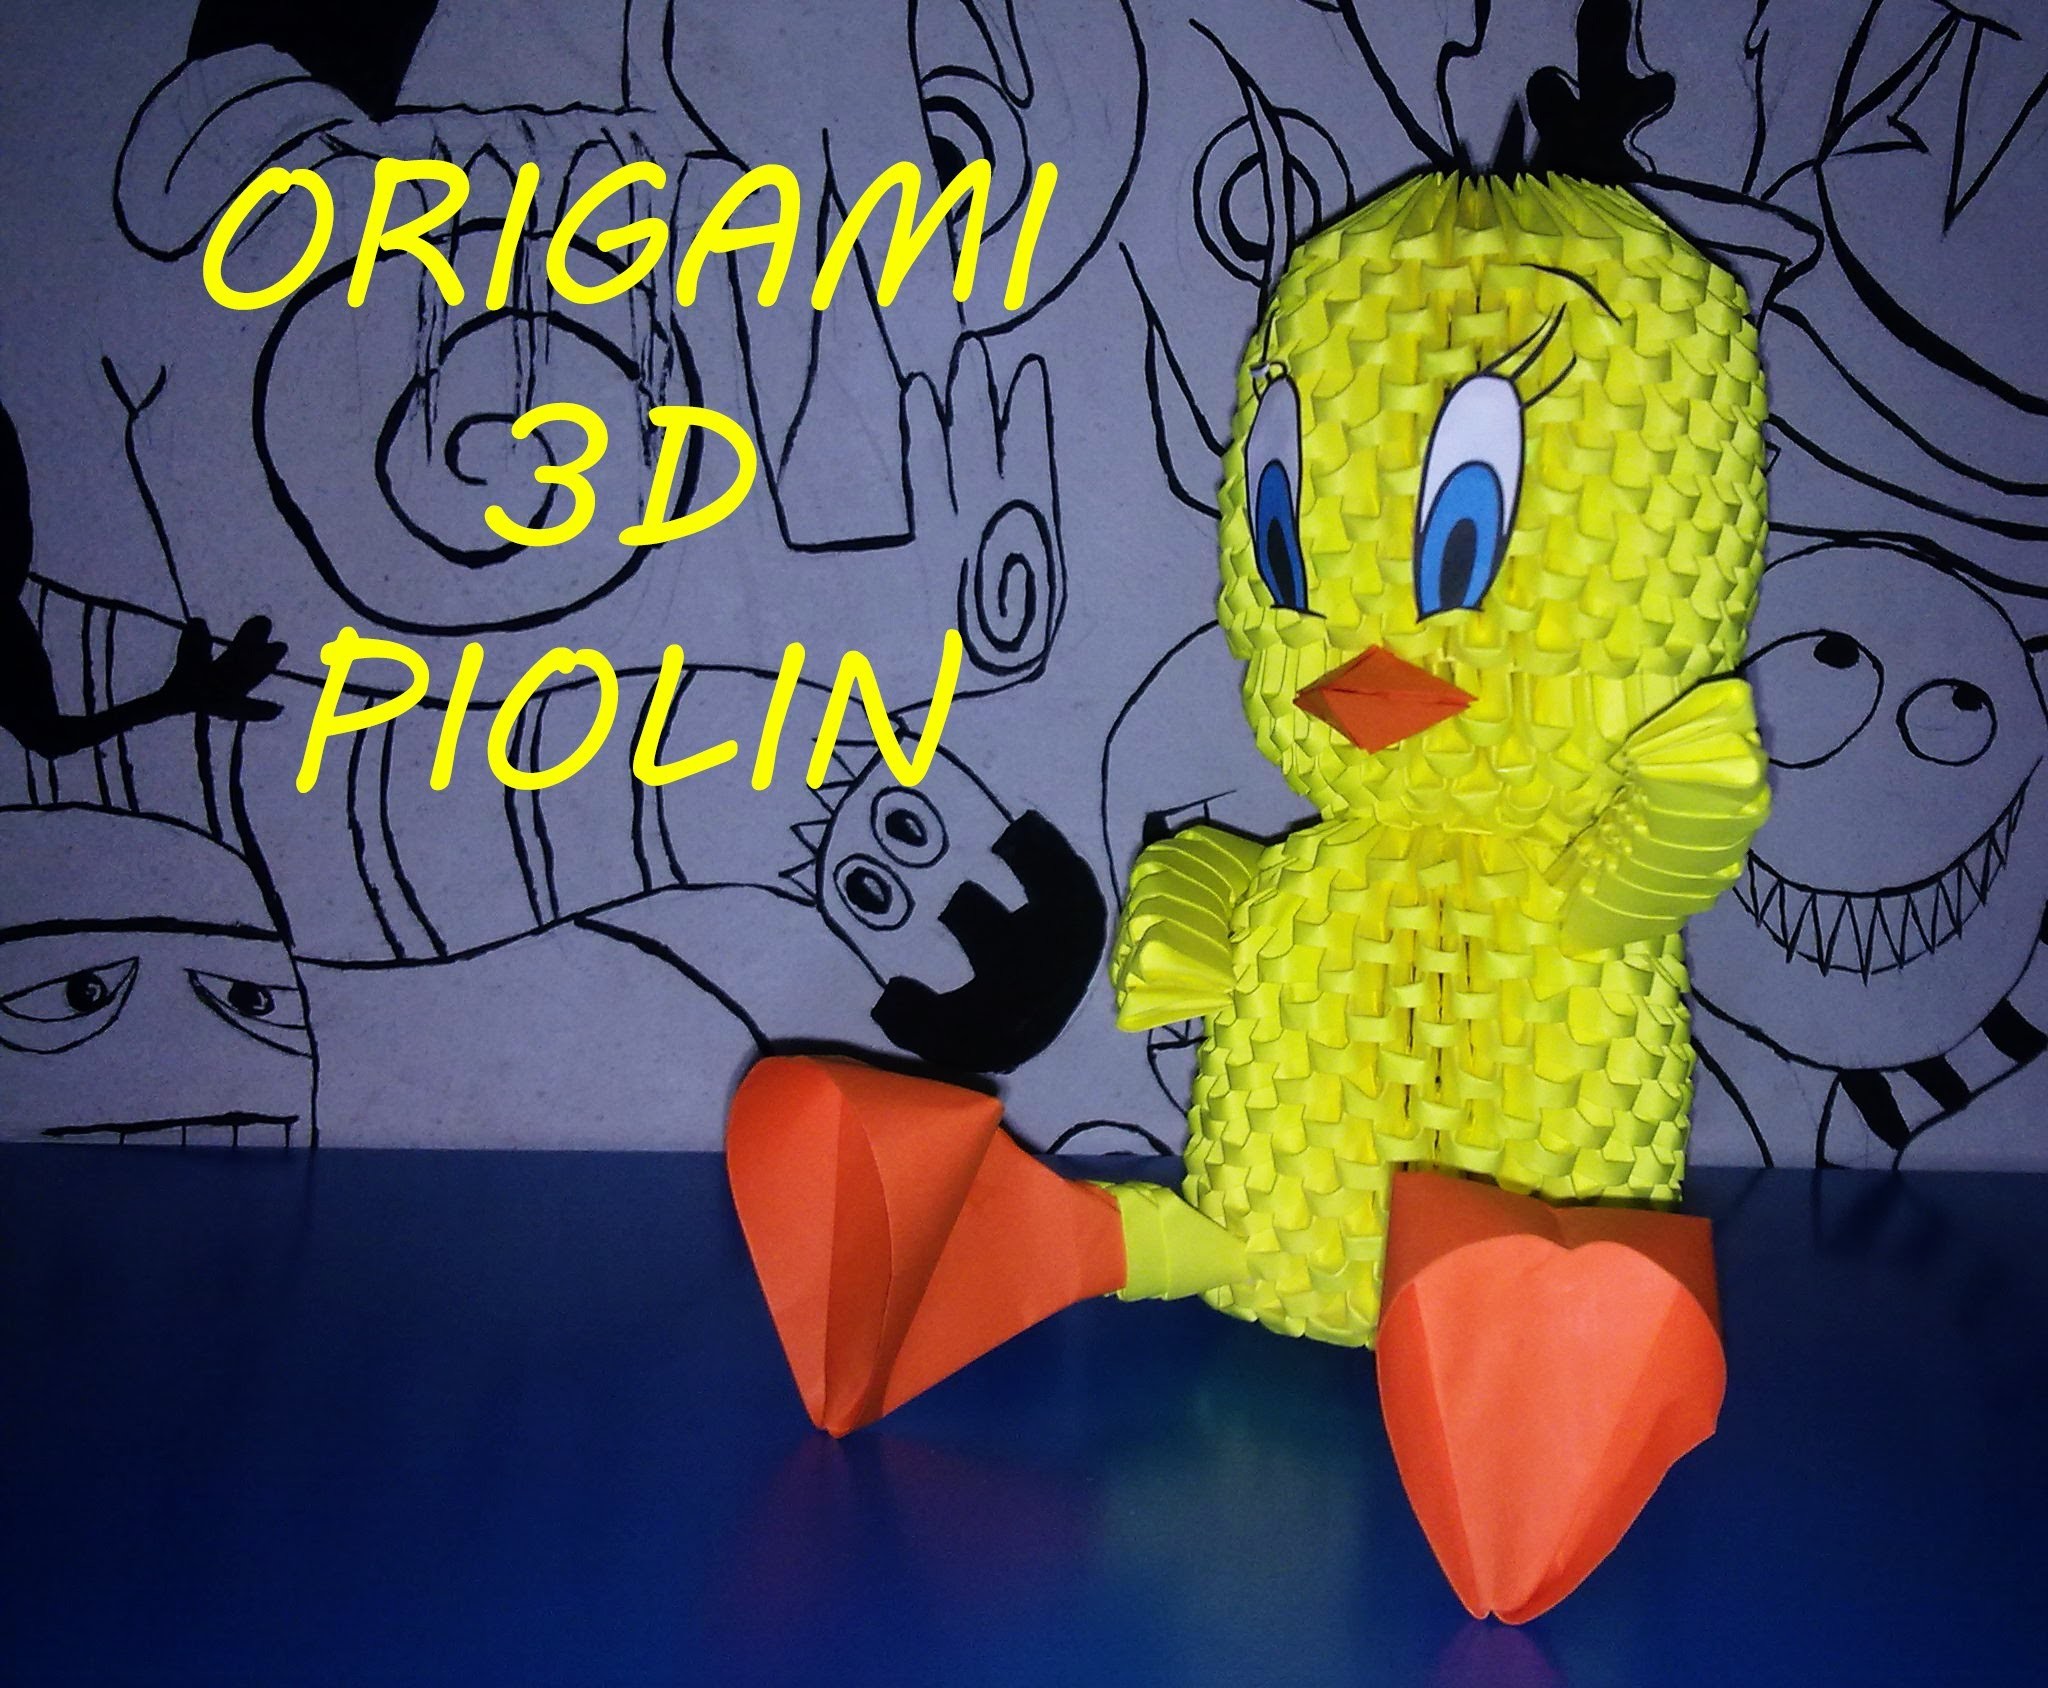 Origami 3D Piolin